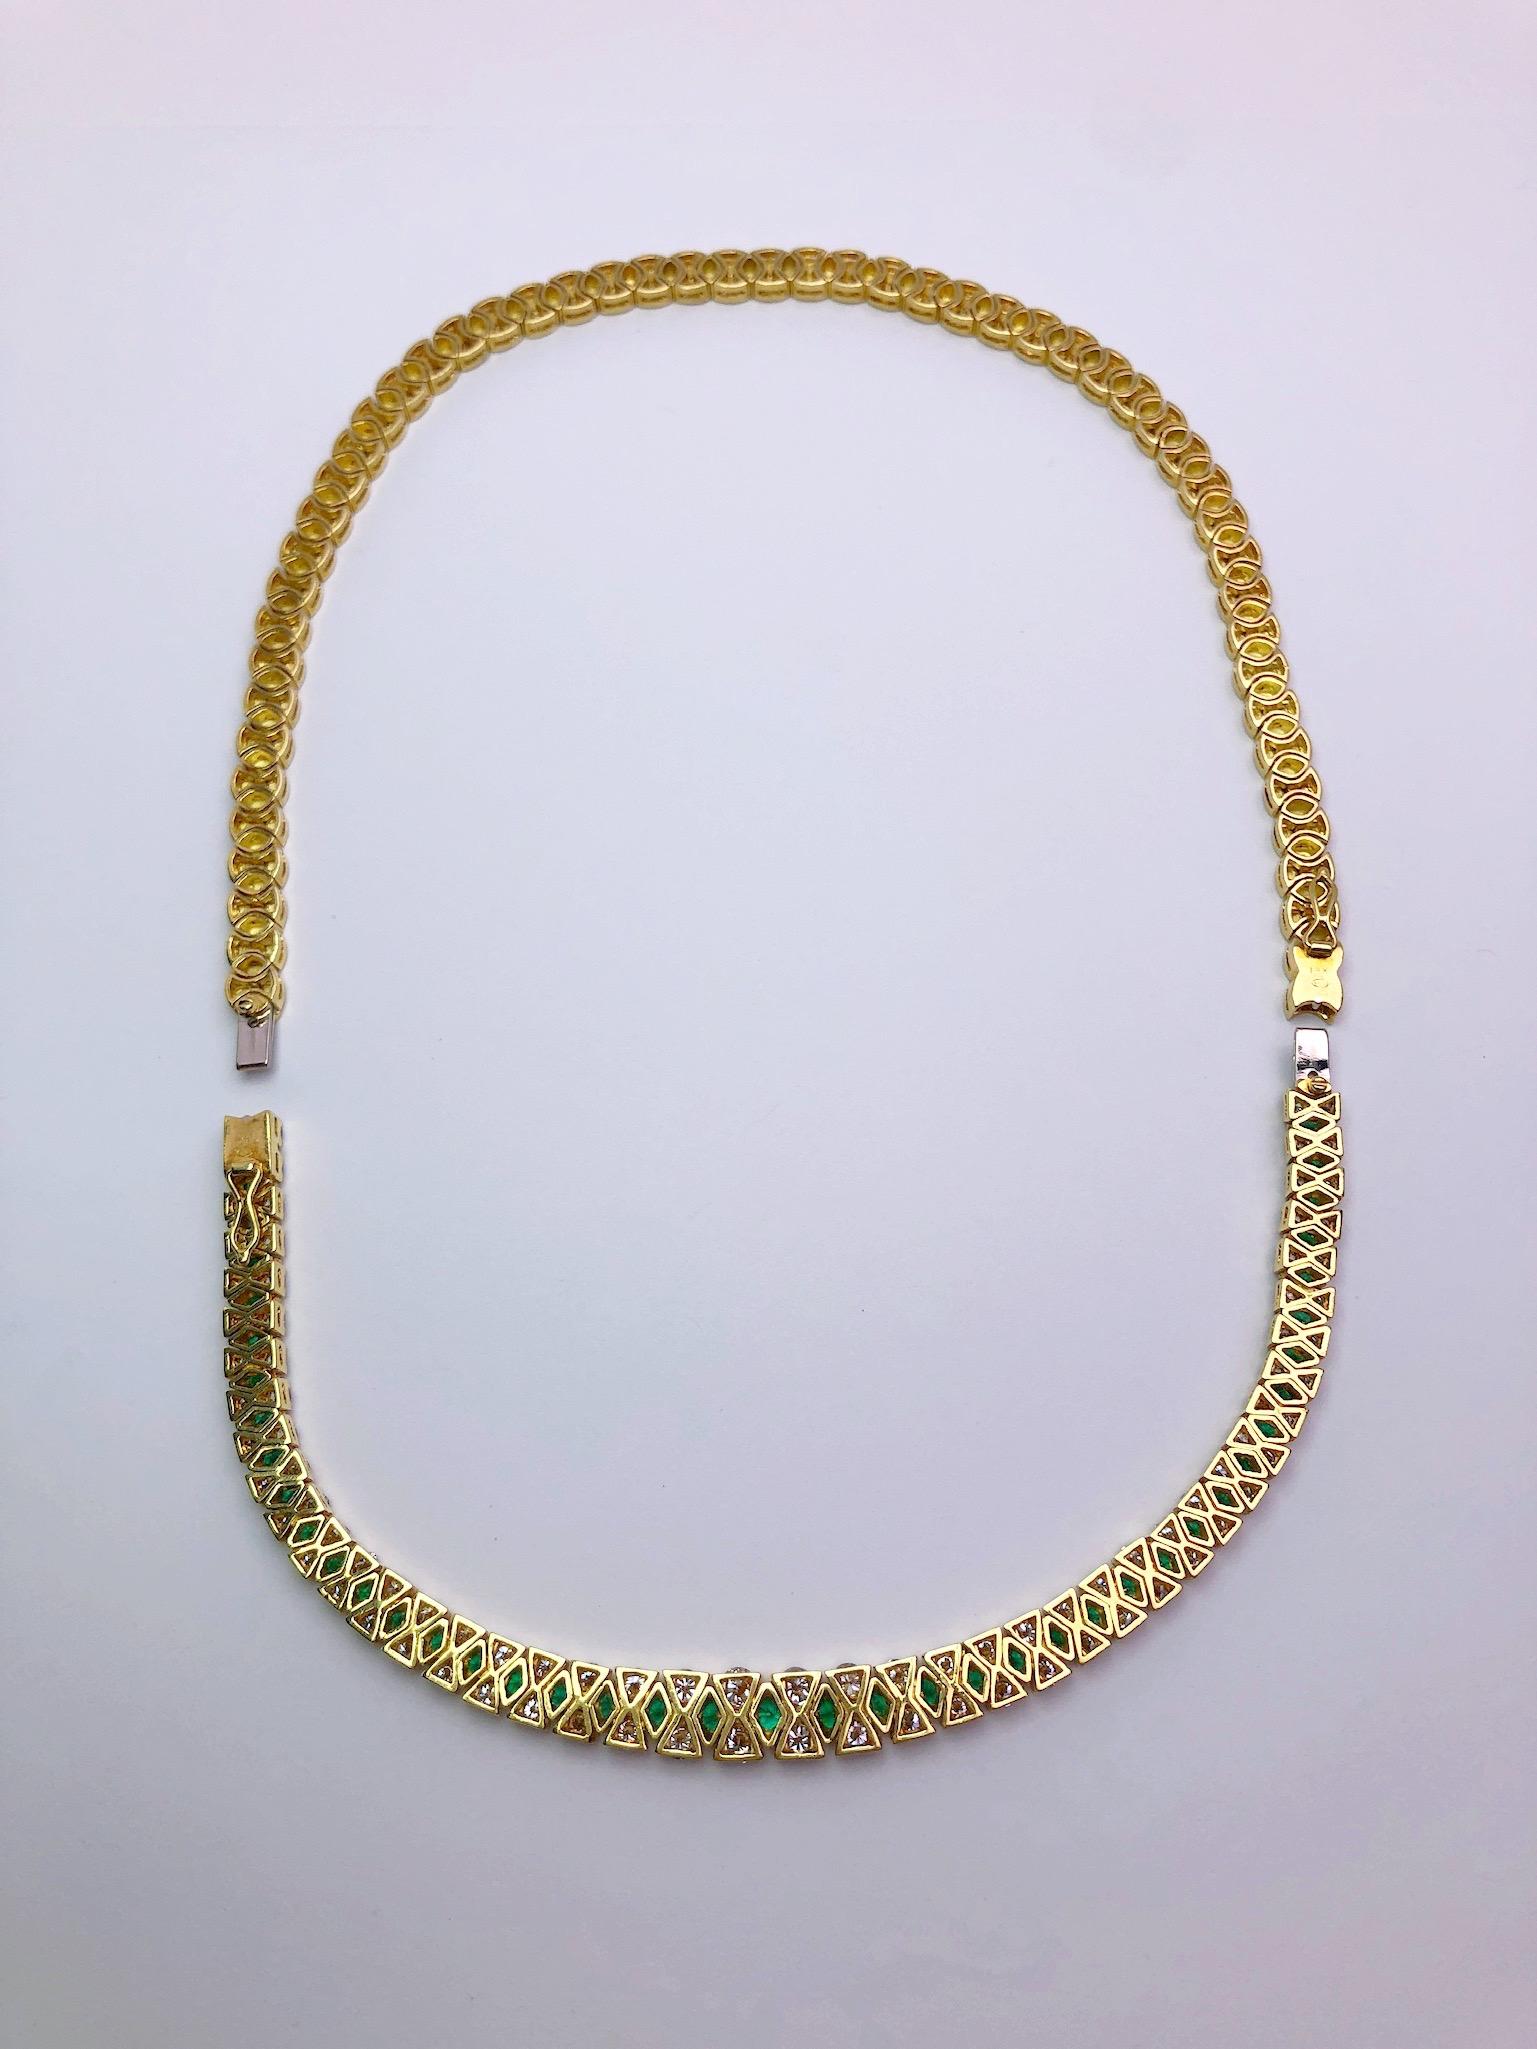 18 Karat Gold 3.68 Carat Emerald and 4.31 Carat Diamond Necklace and Bracelet For Sale 5